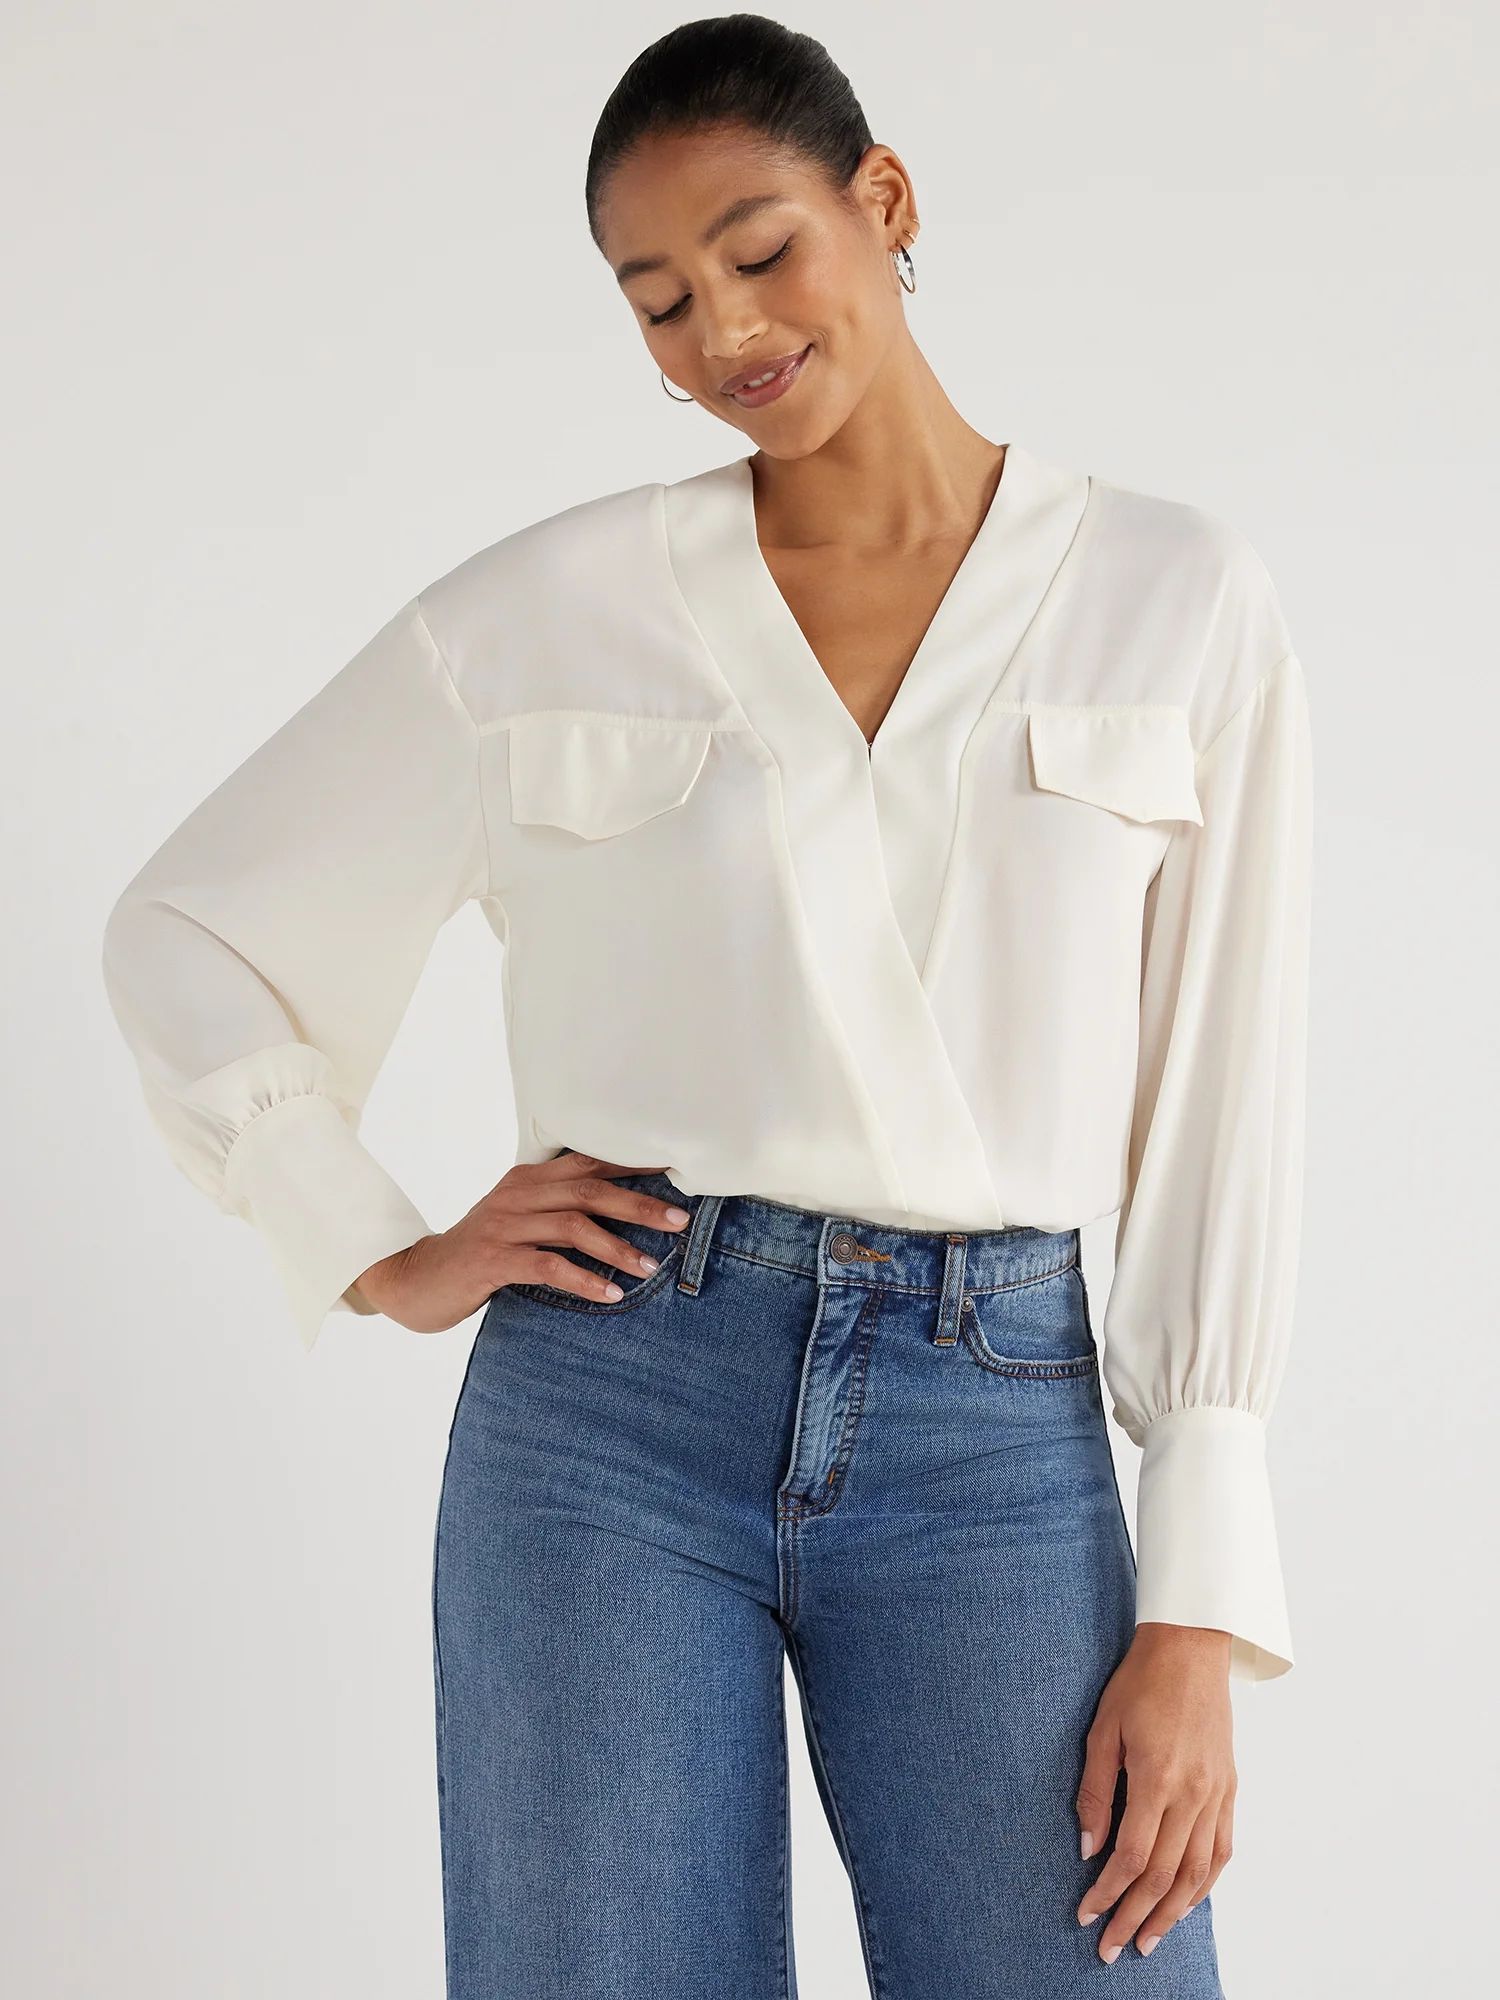 Scoop Women’s Shirt Bodysuit with Long Sleeves, Sizes XS-XXL | Walmart (US)